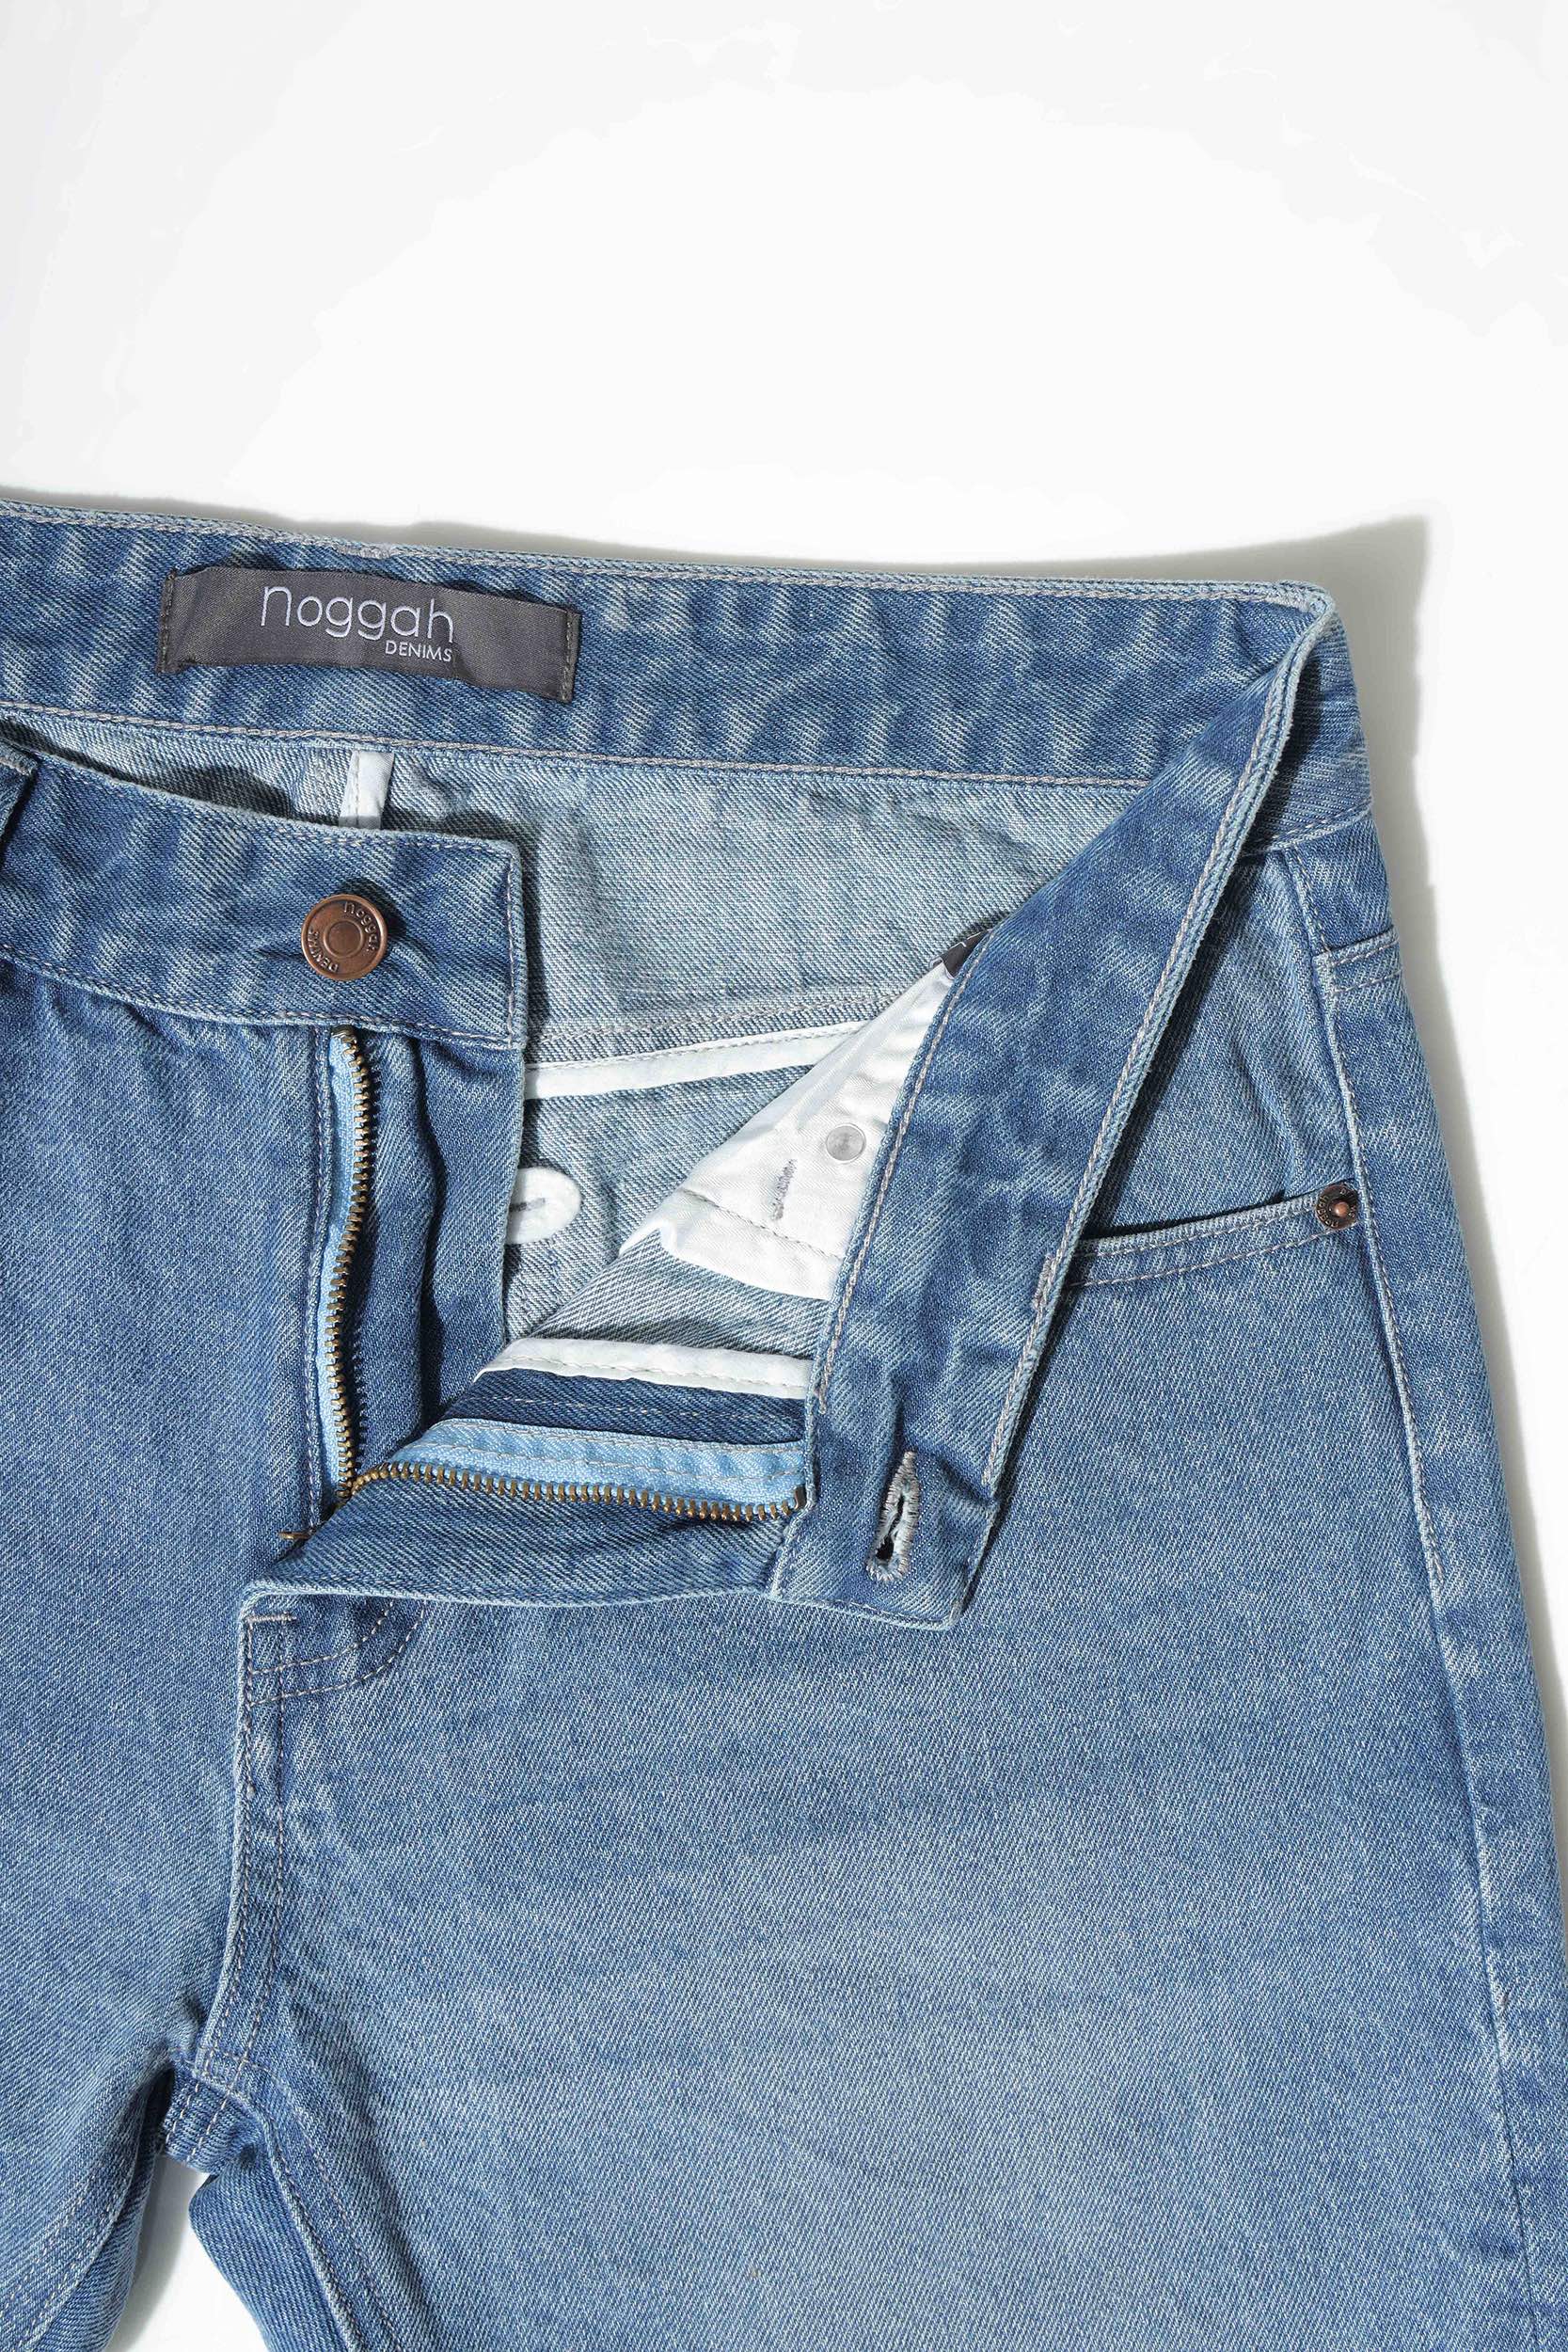 SO Girls High Tise Jegging Jeans | Girls high, Jeggings, Clothes design